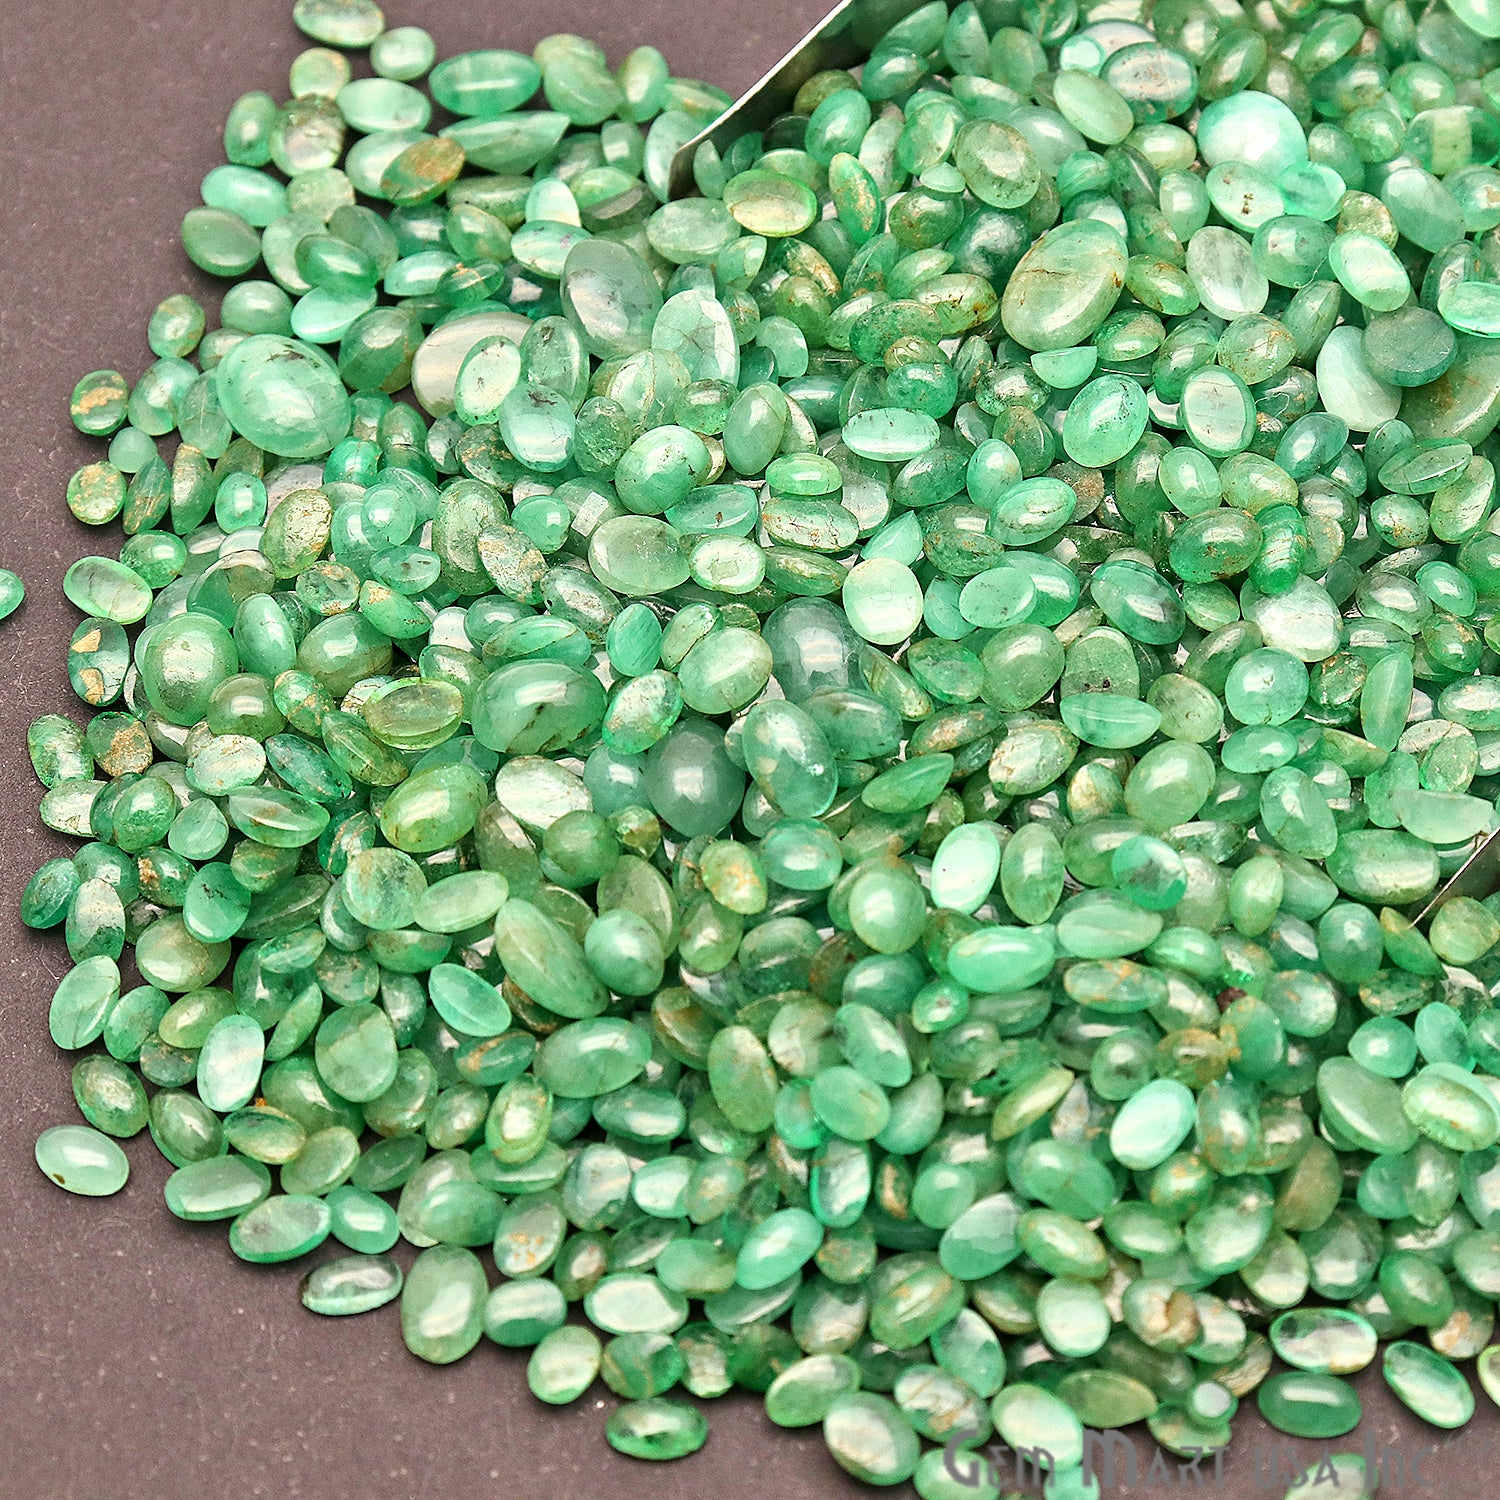 5ct Emerald Gemstone Mix Shape 6x8mm Beads Cabochons Loose Stones - GemMartUSA